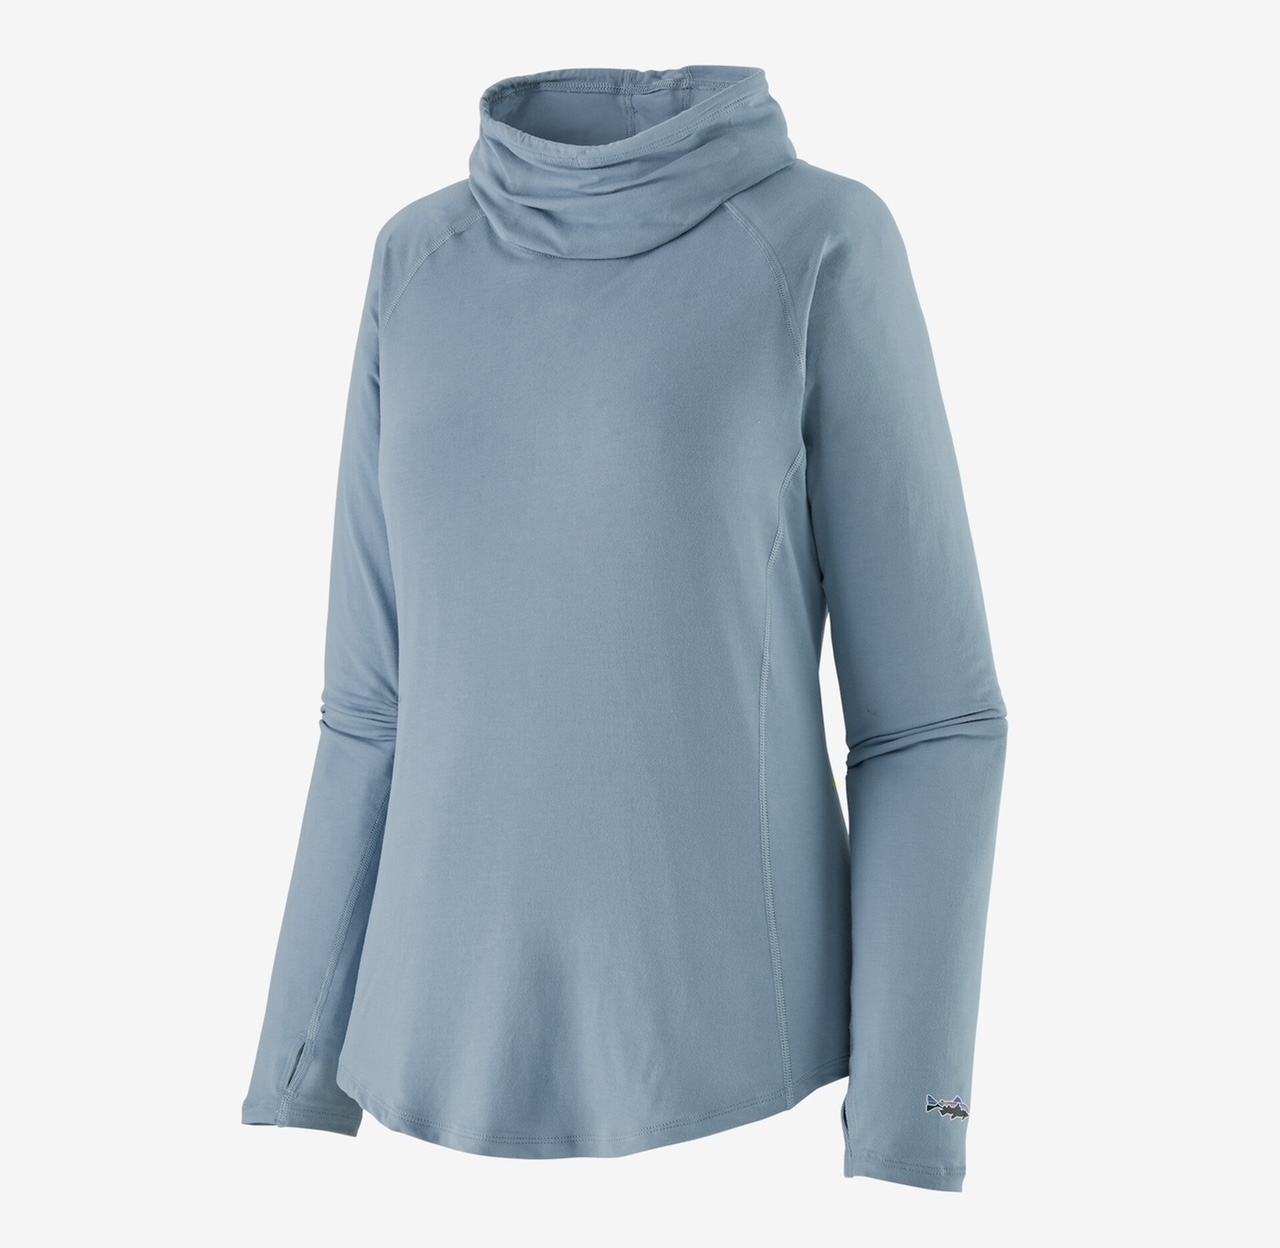 Patagonia W's Tropic Comfort Natural Shirt - Light Plume Grey - XL